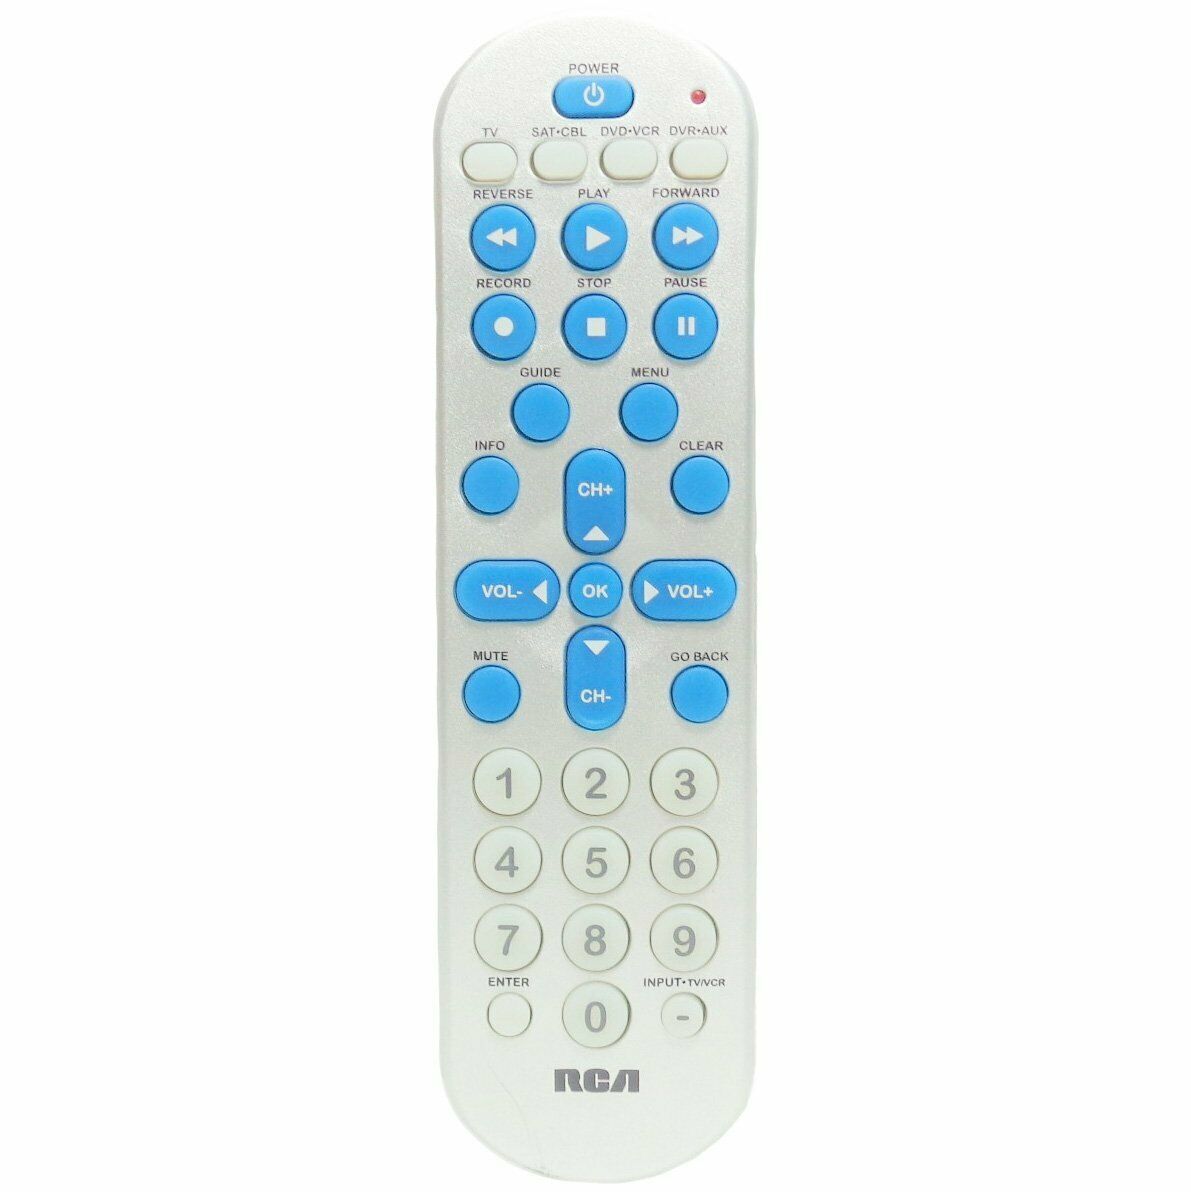 Primary image for RCA RCR4358 Big Button 4 Device Universal Remote - TV, SAT/CBL, DVD/VCR, DVR/AUX